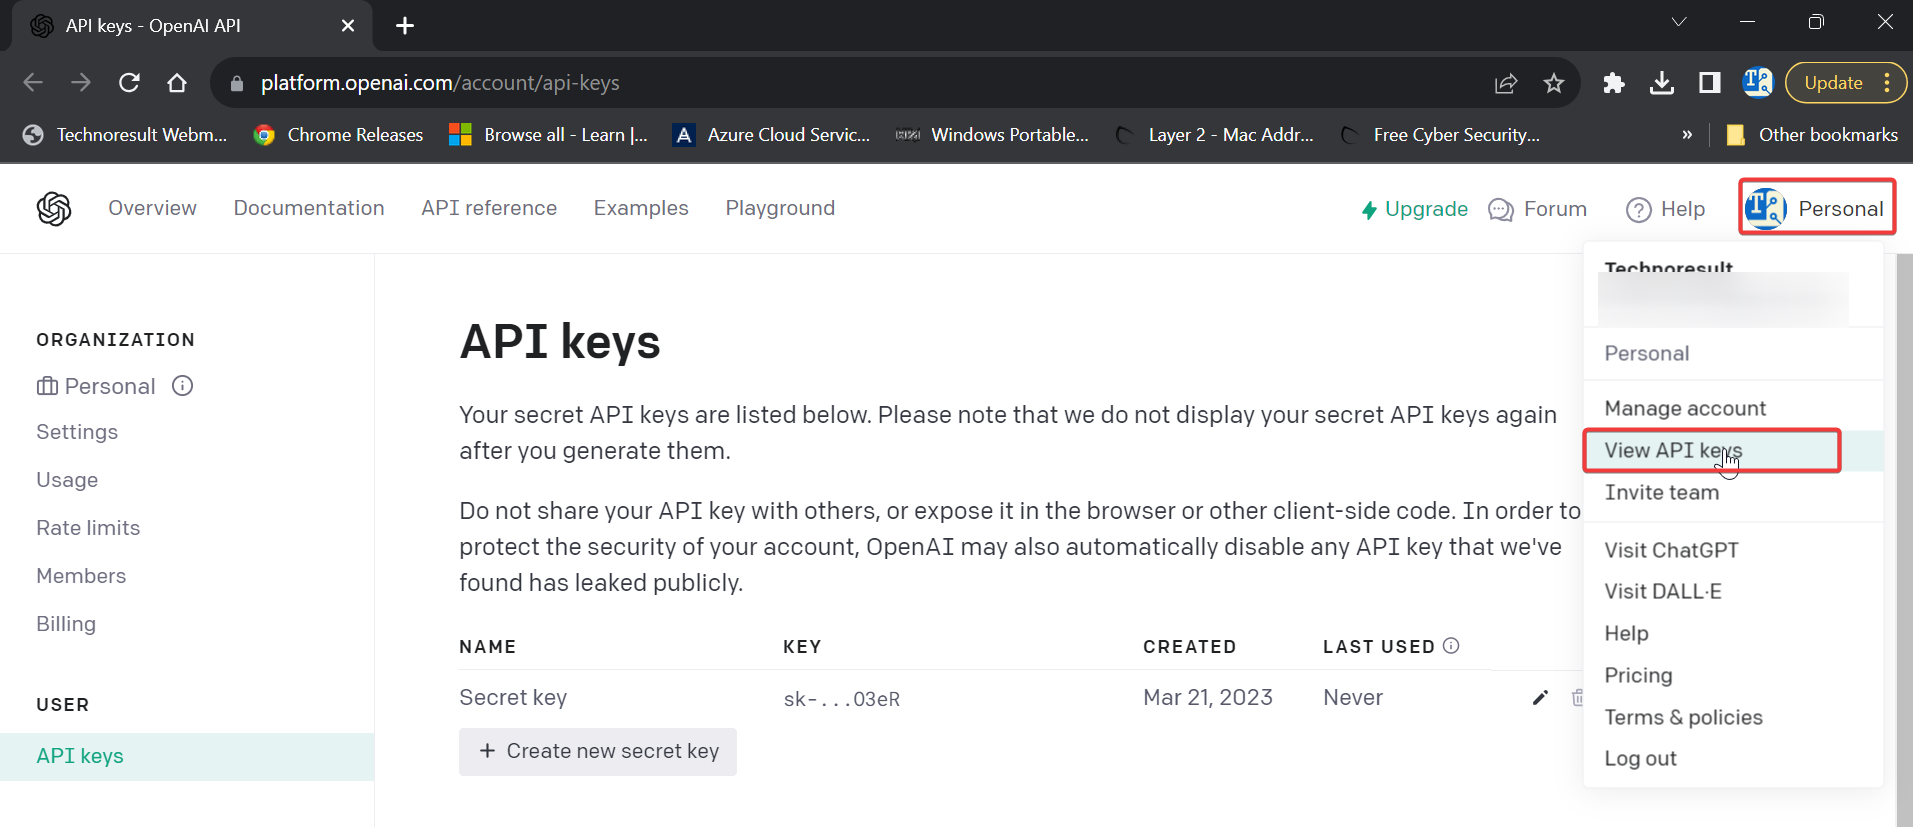 View API keys